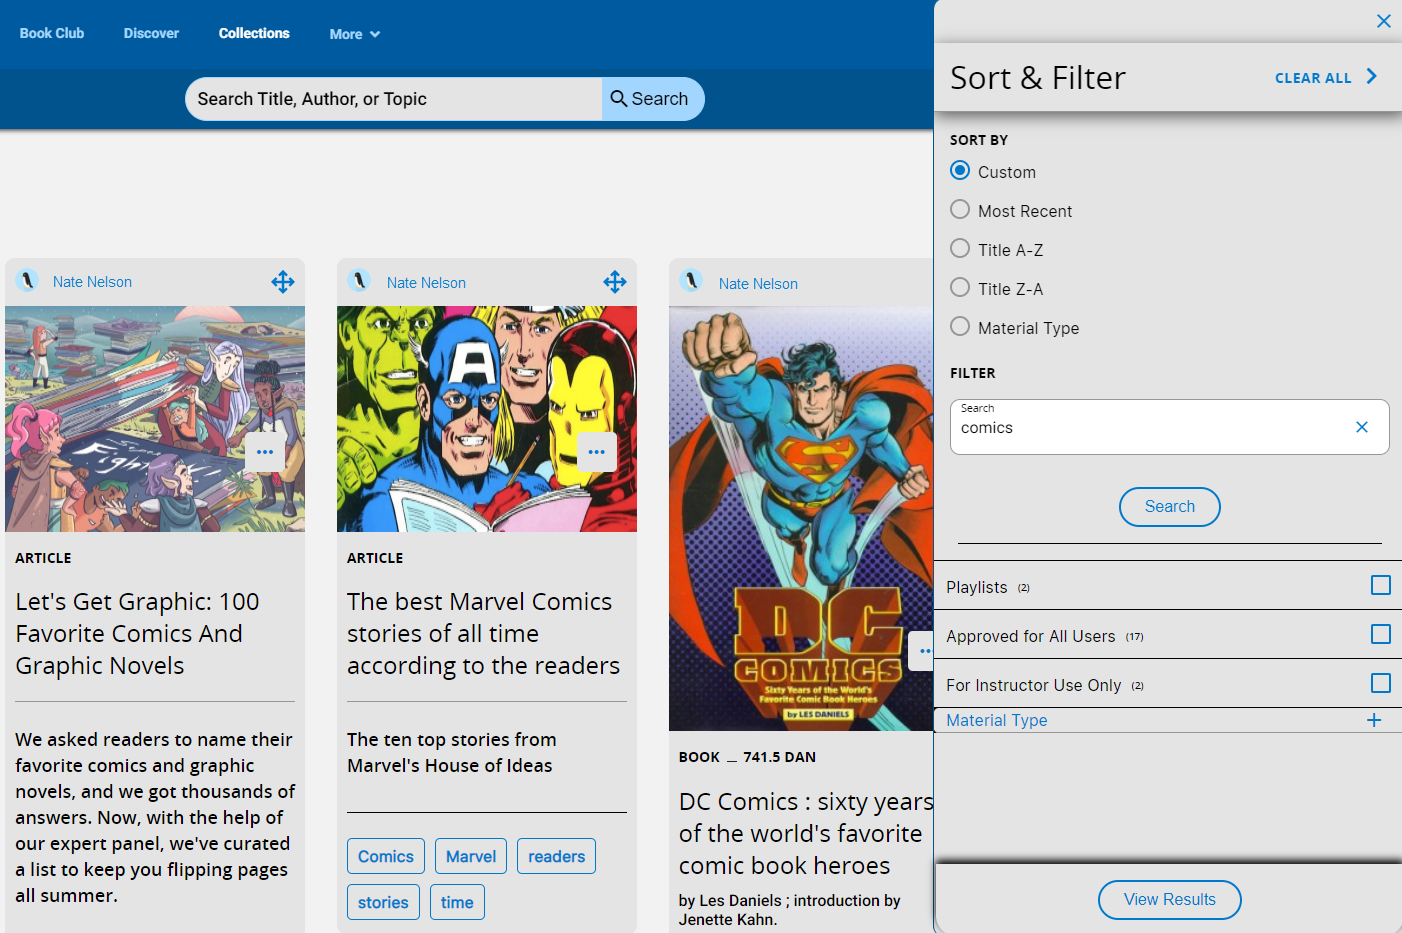 Sort and Filter menu slideout.